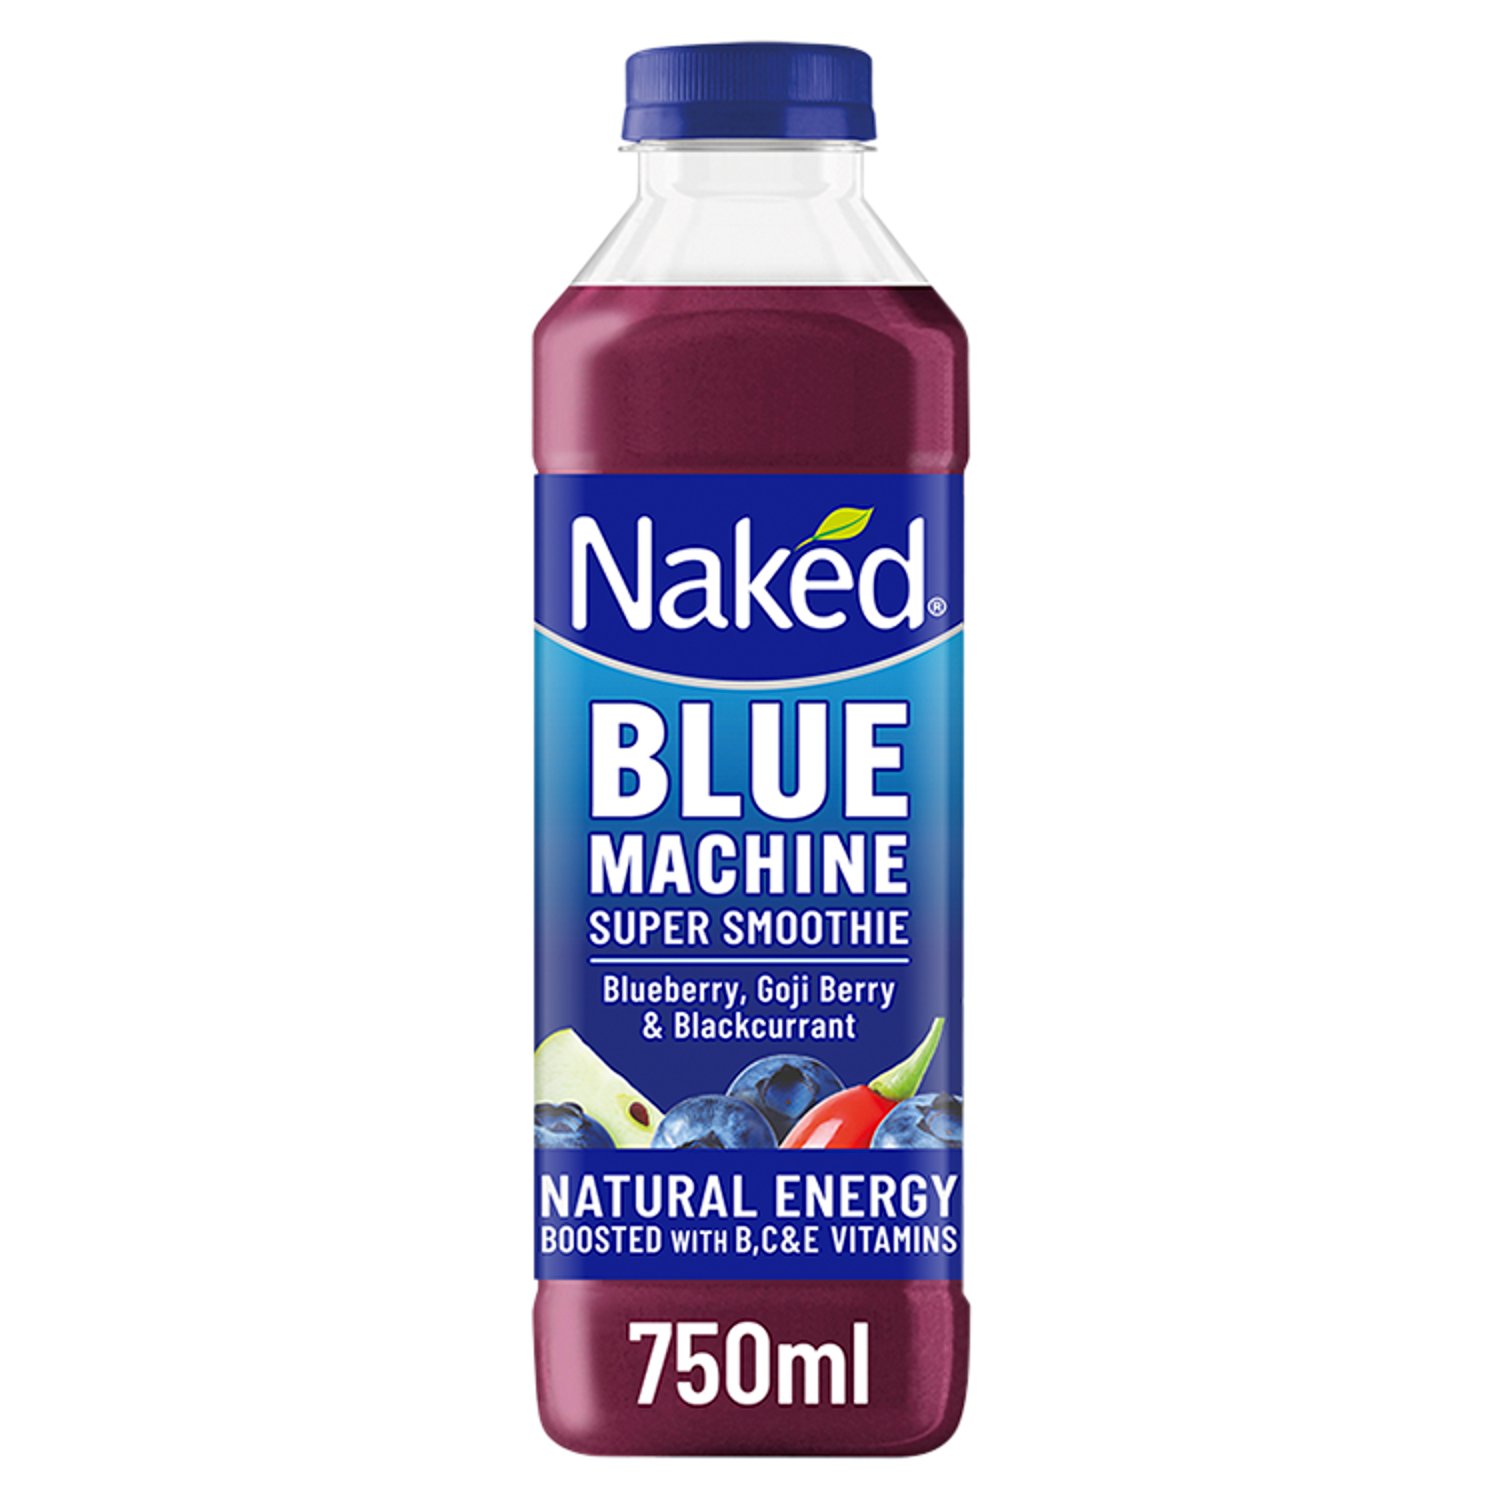 Naked Blue Machine (750 ml)